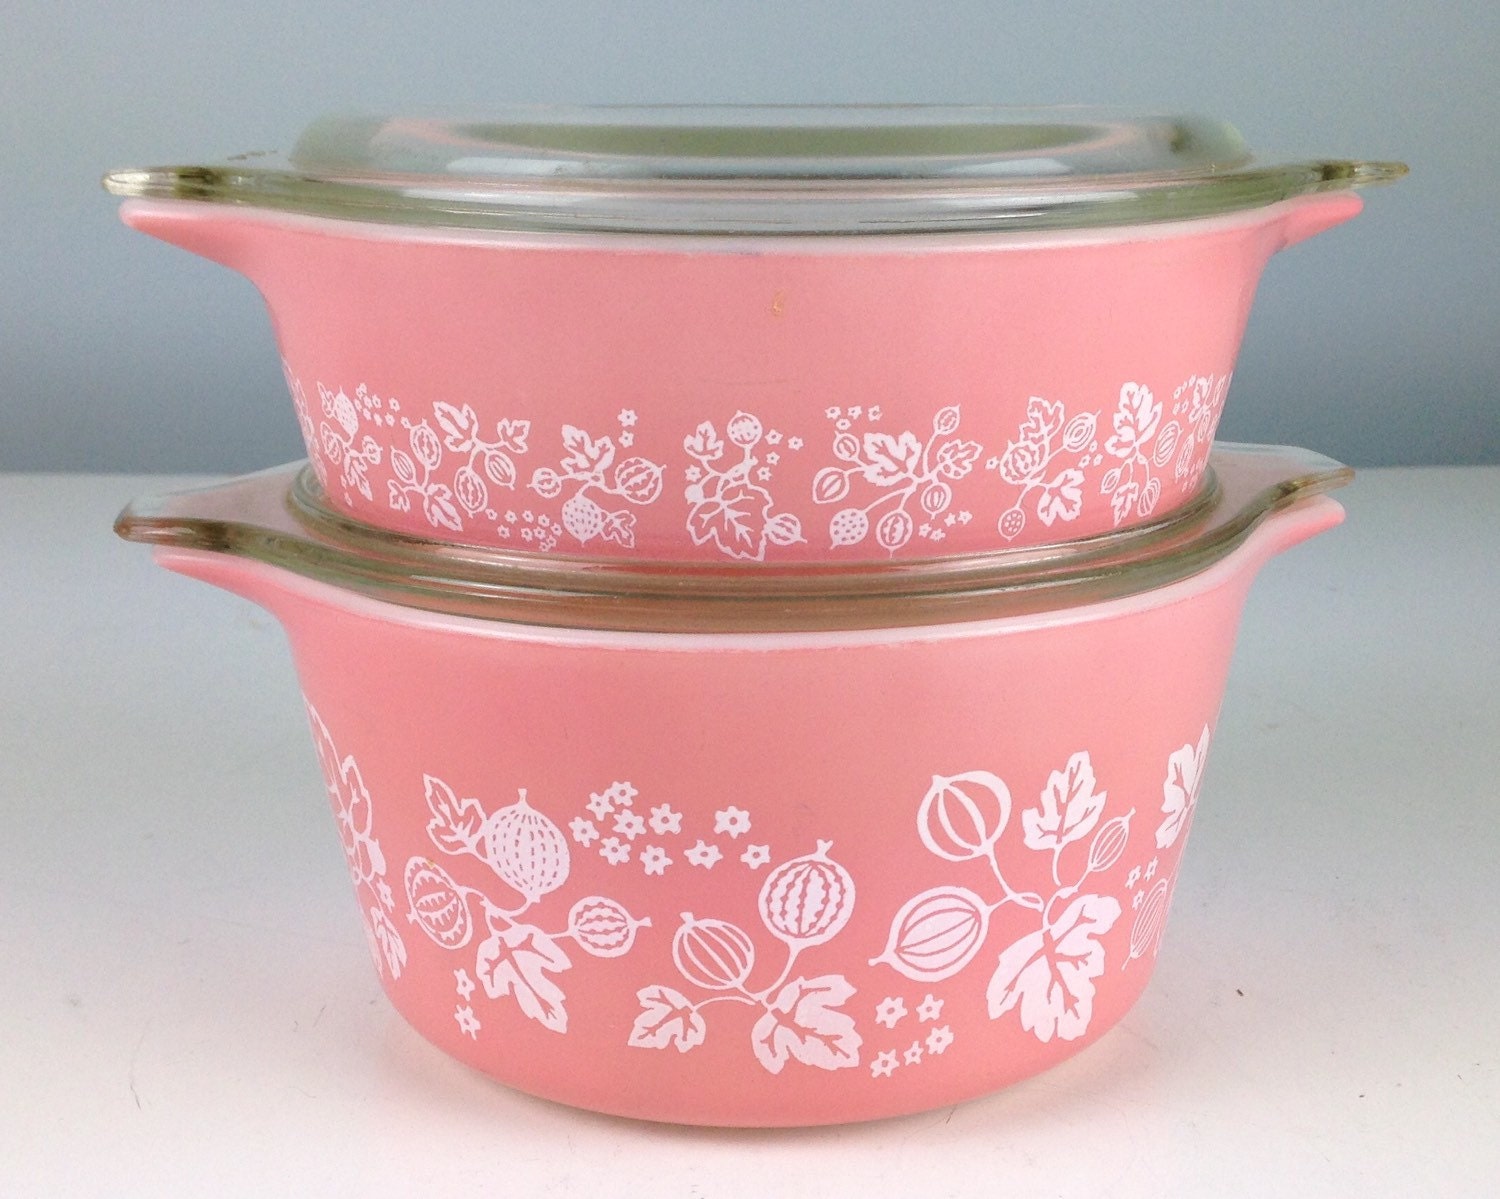 Vintage pink pyrex casserole dish